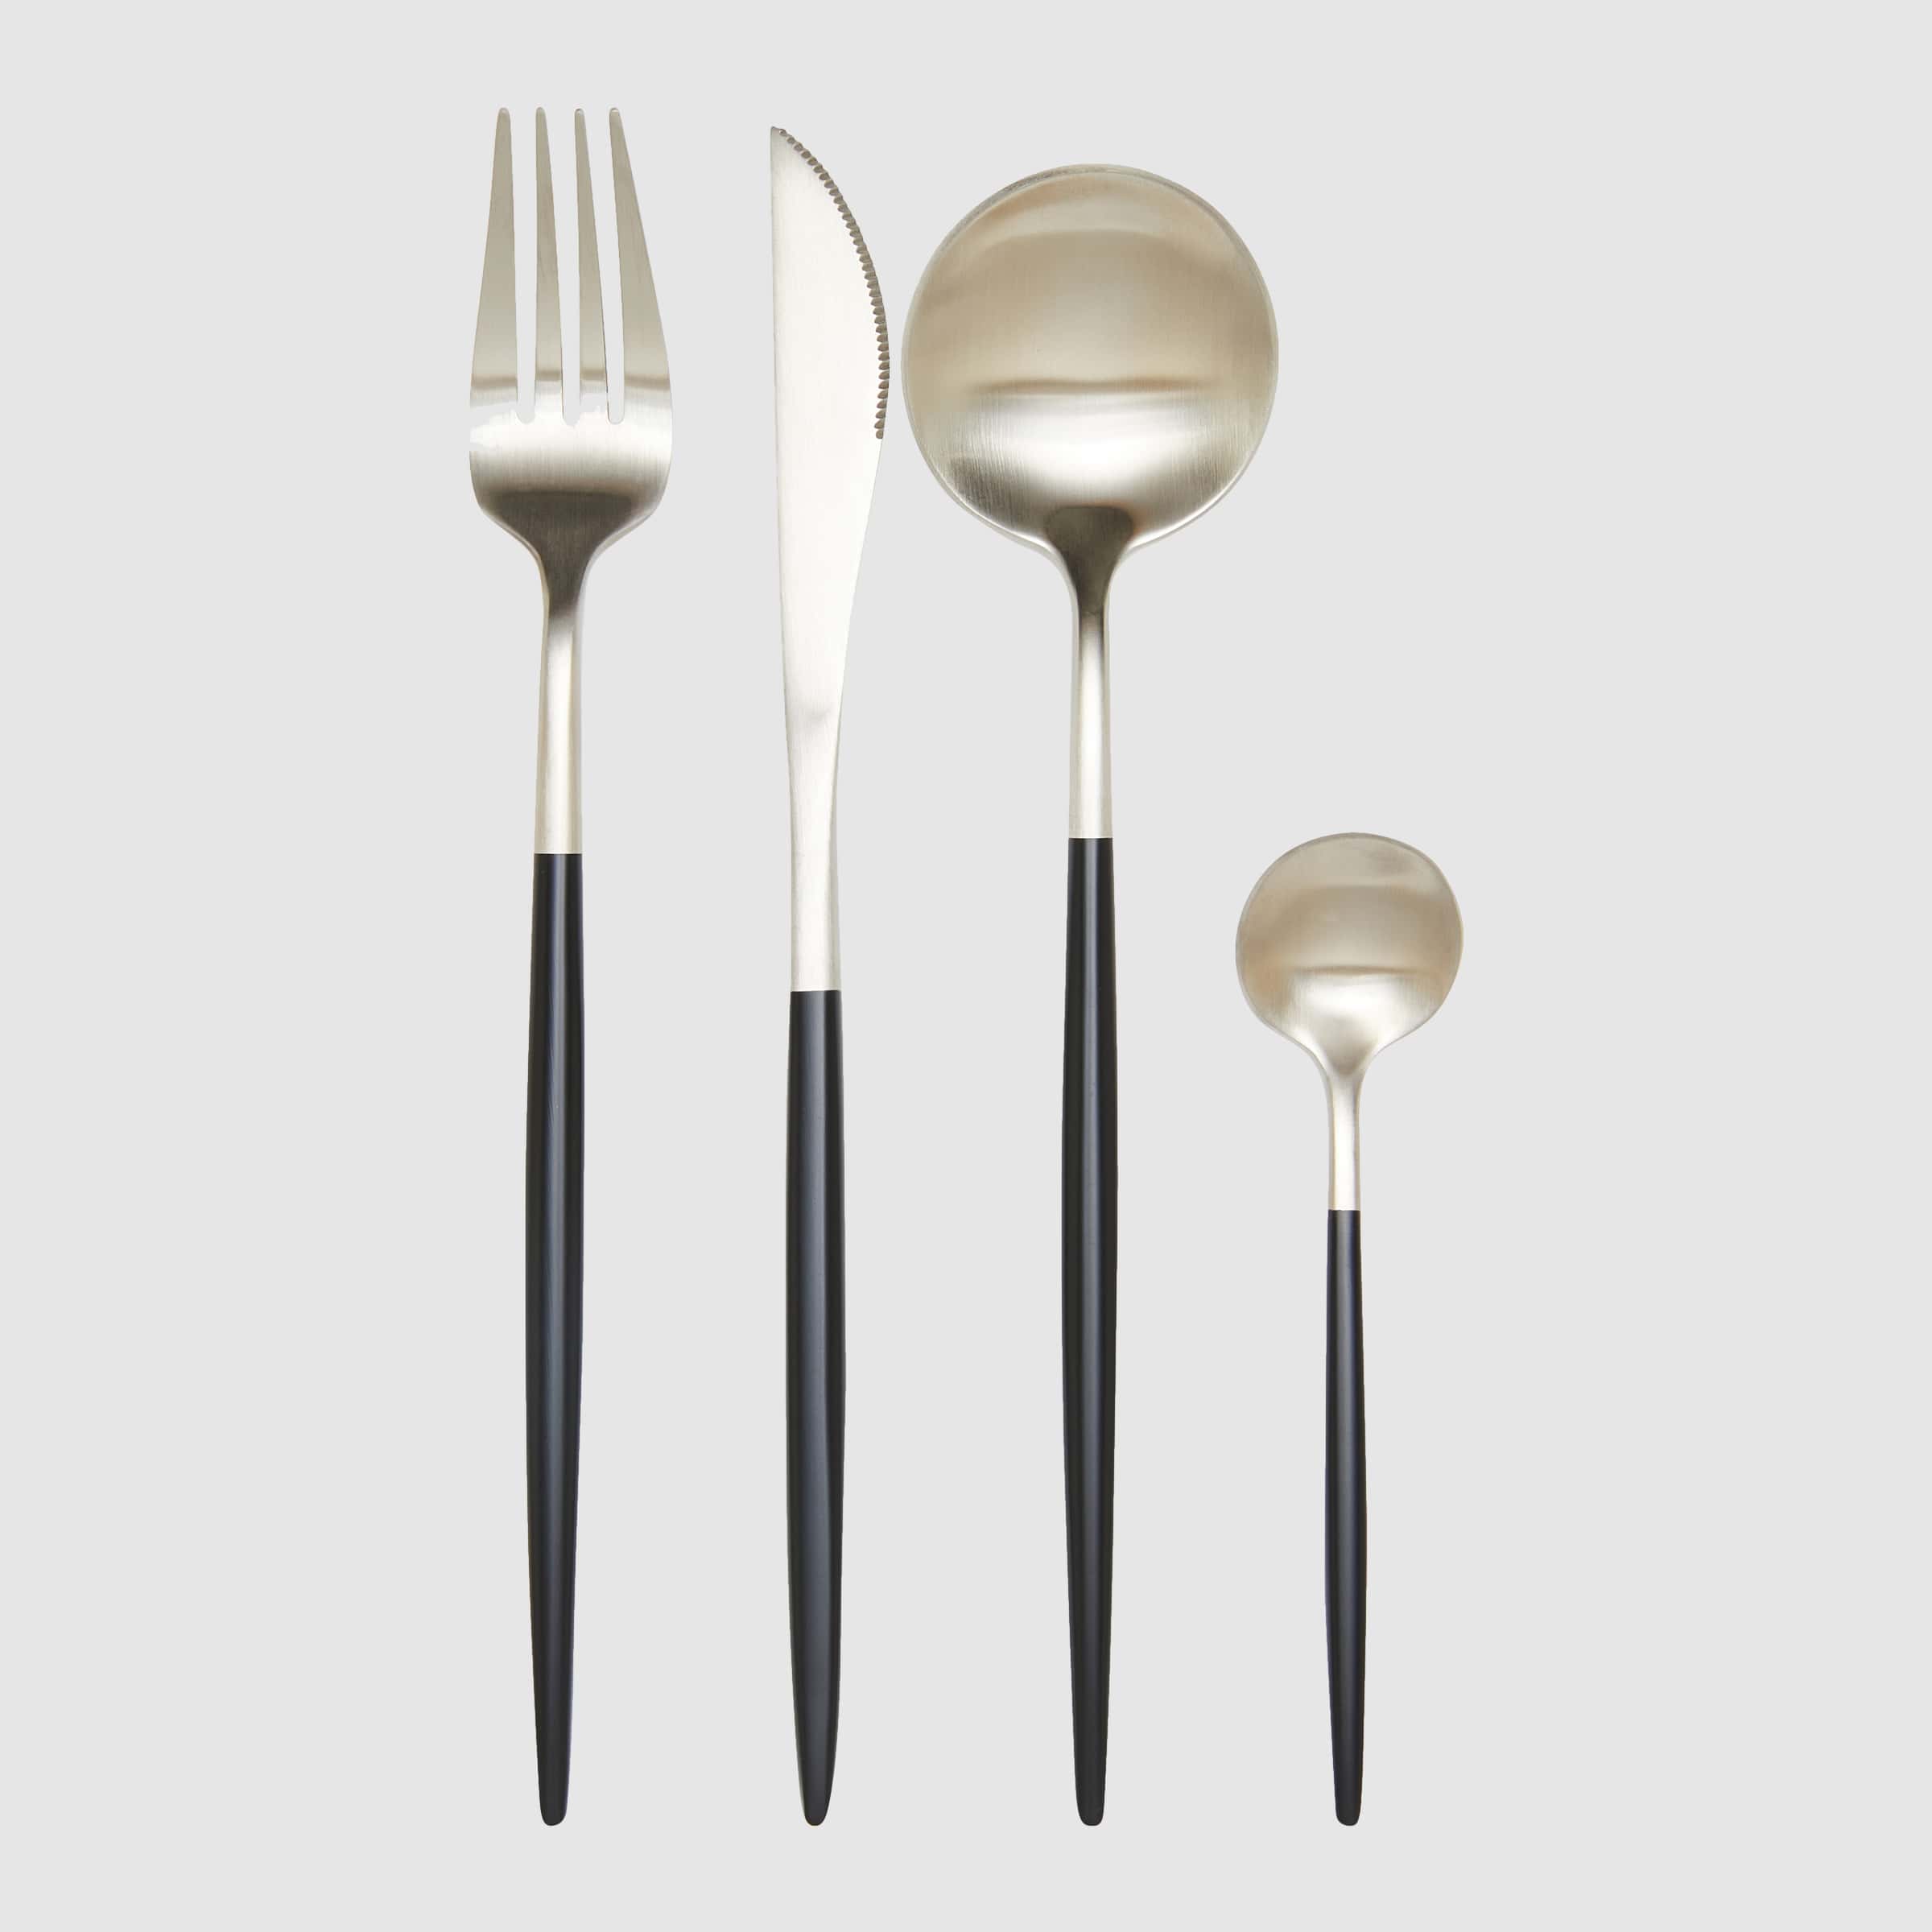 Peru Cutlery Set - Silver - Buy Flatware Sets Online at FRANKY'S